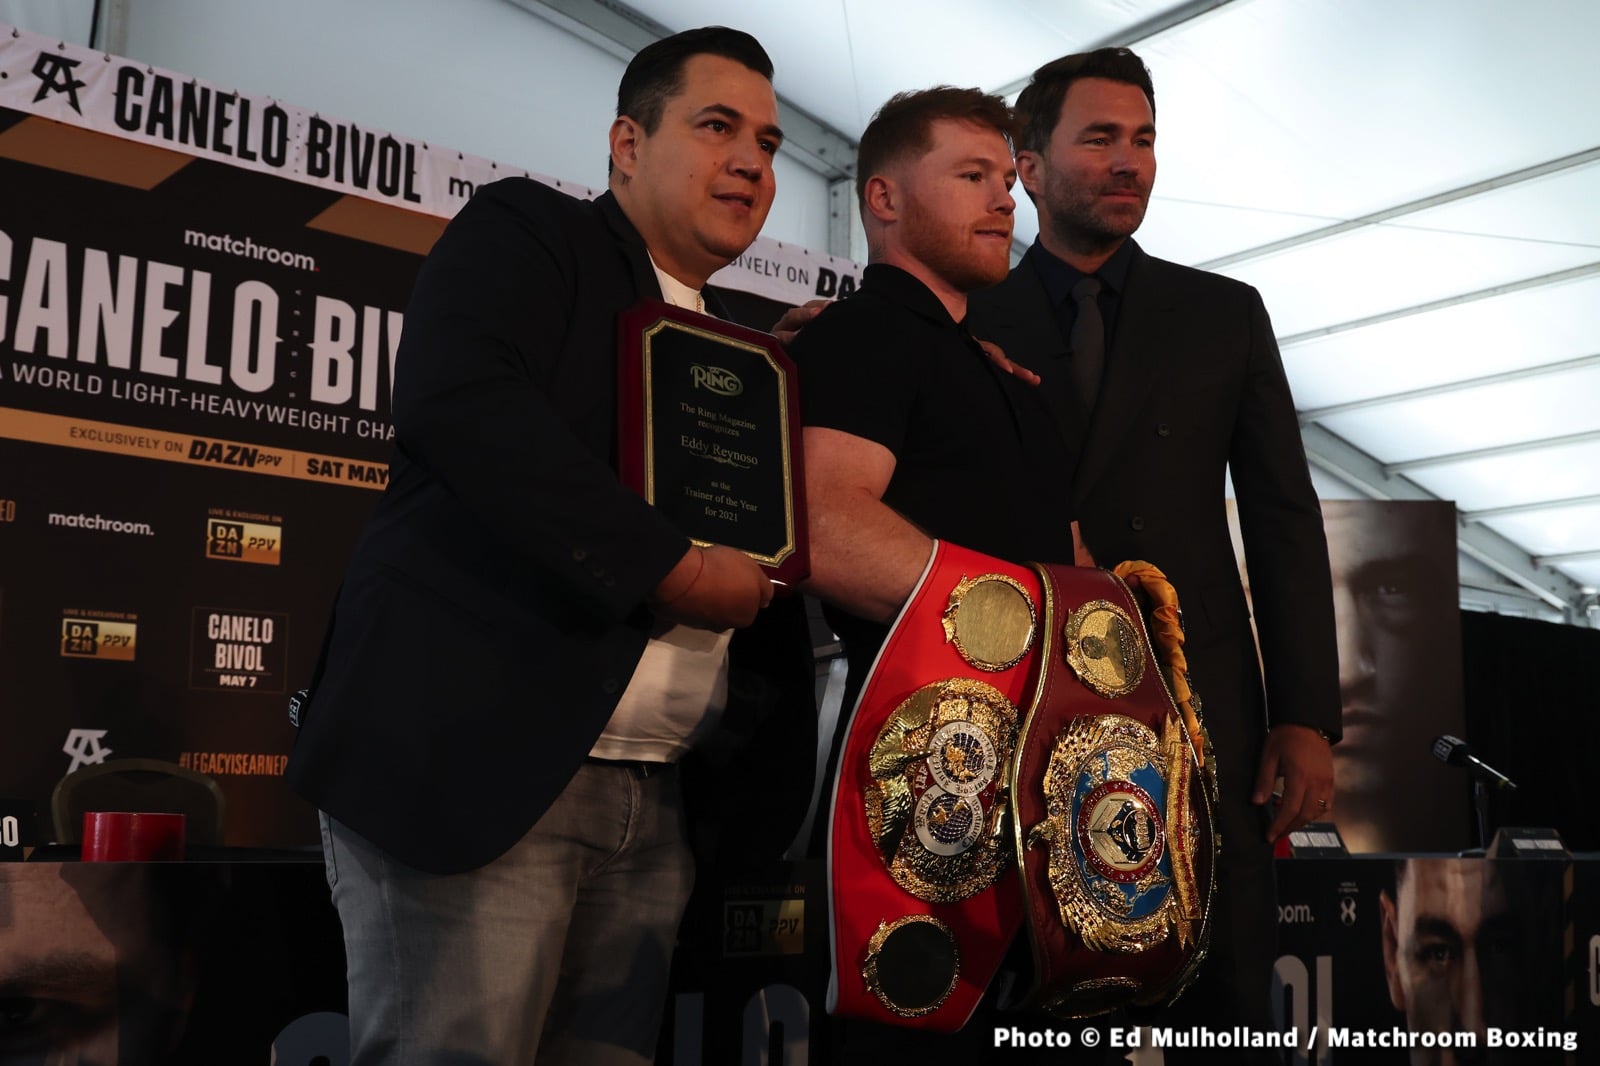 Canelo Alvarez, David Benavidez, Dmitry Bivol, Jermall Charlo boxing photo and news image